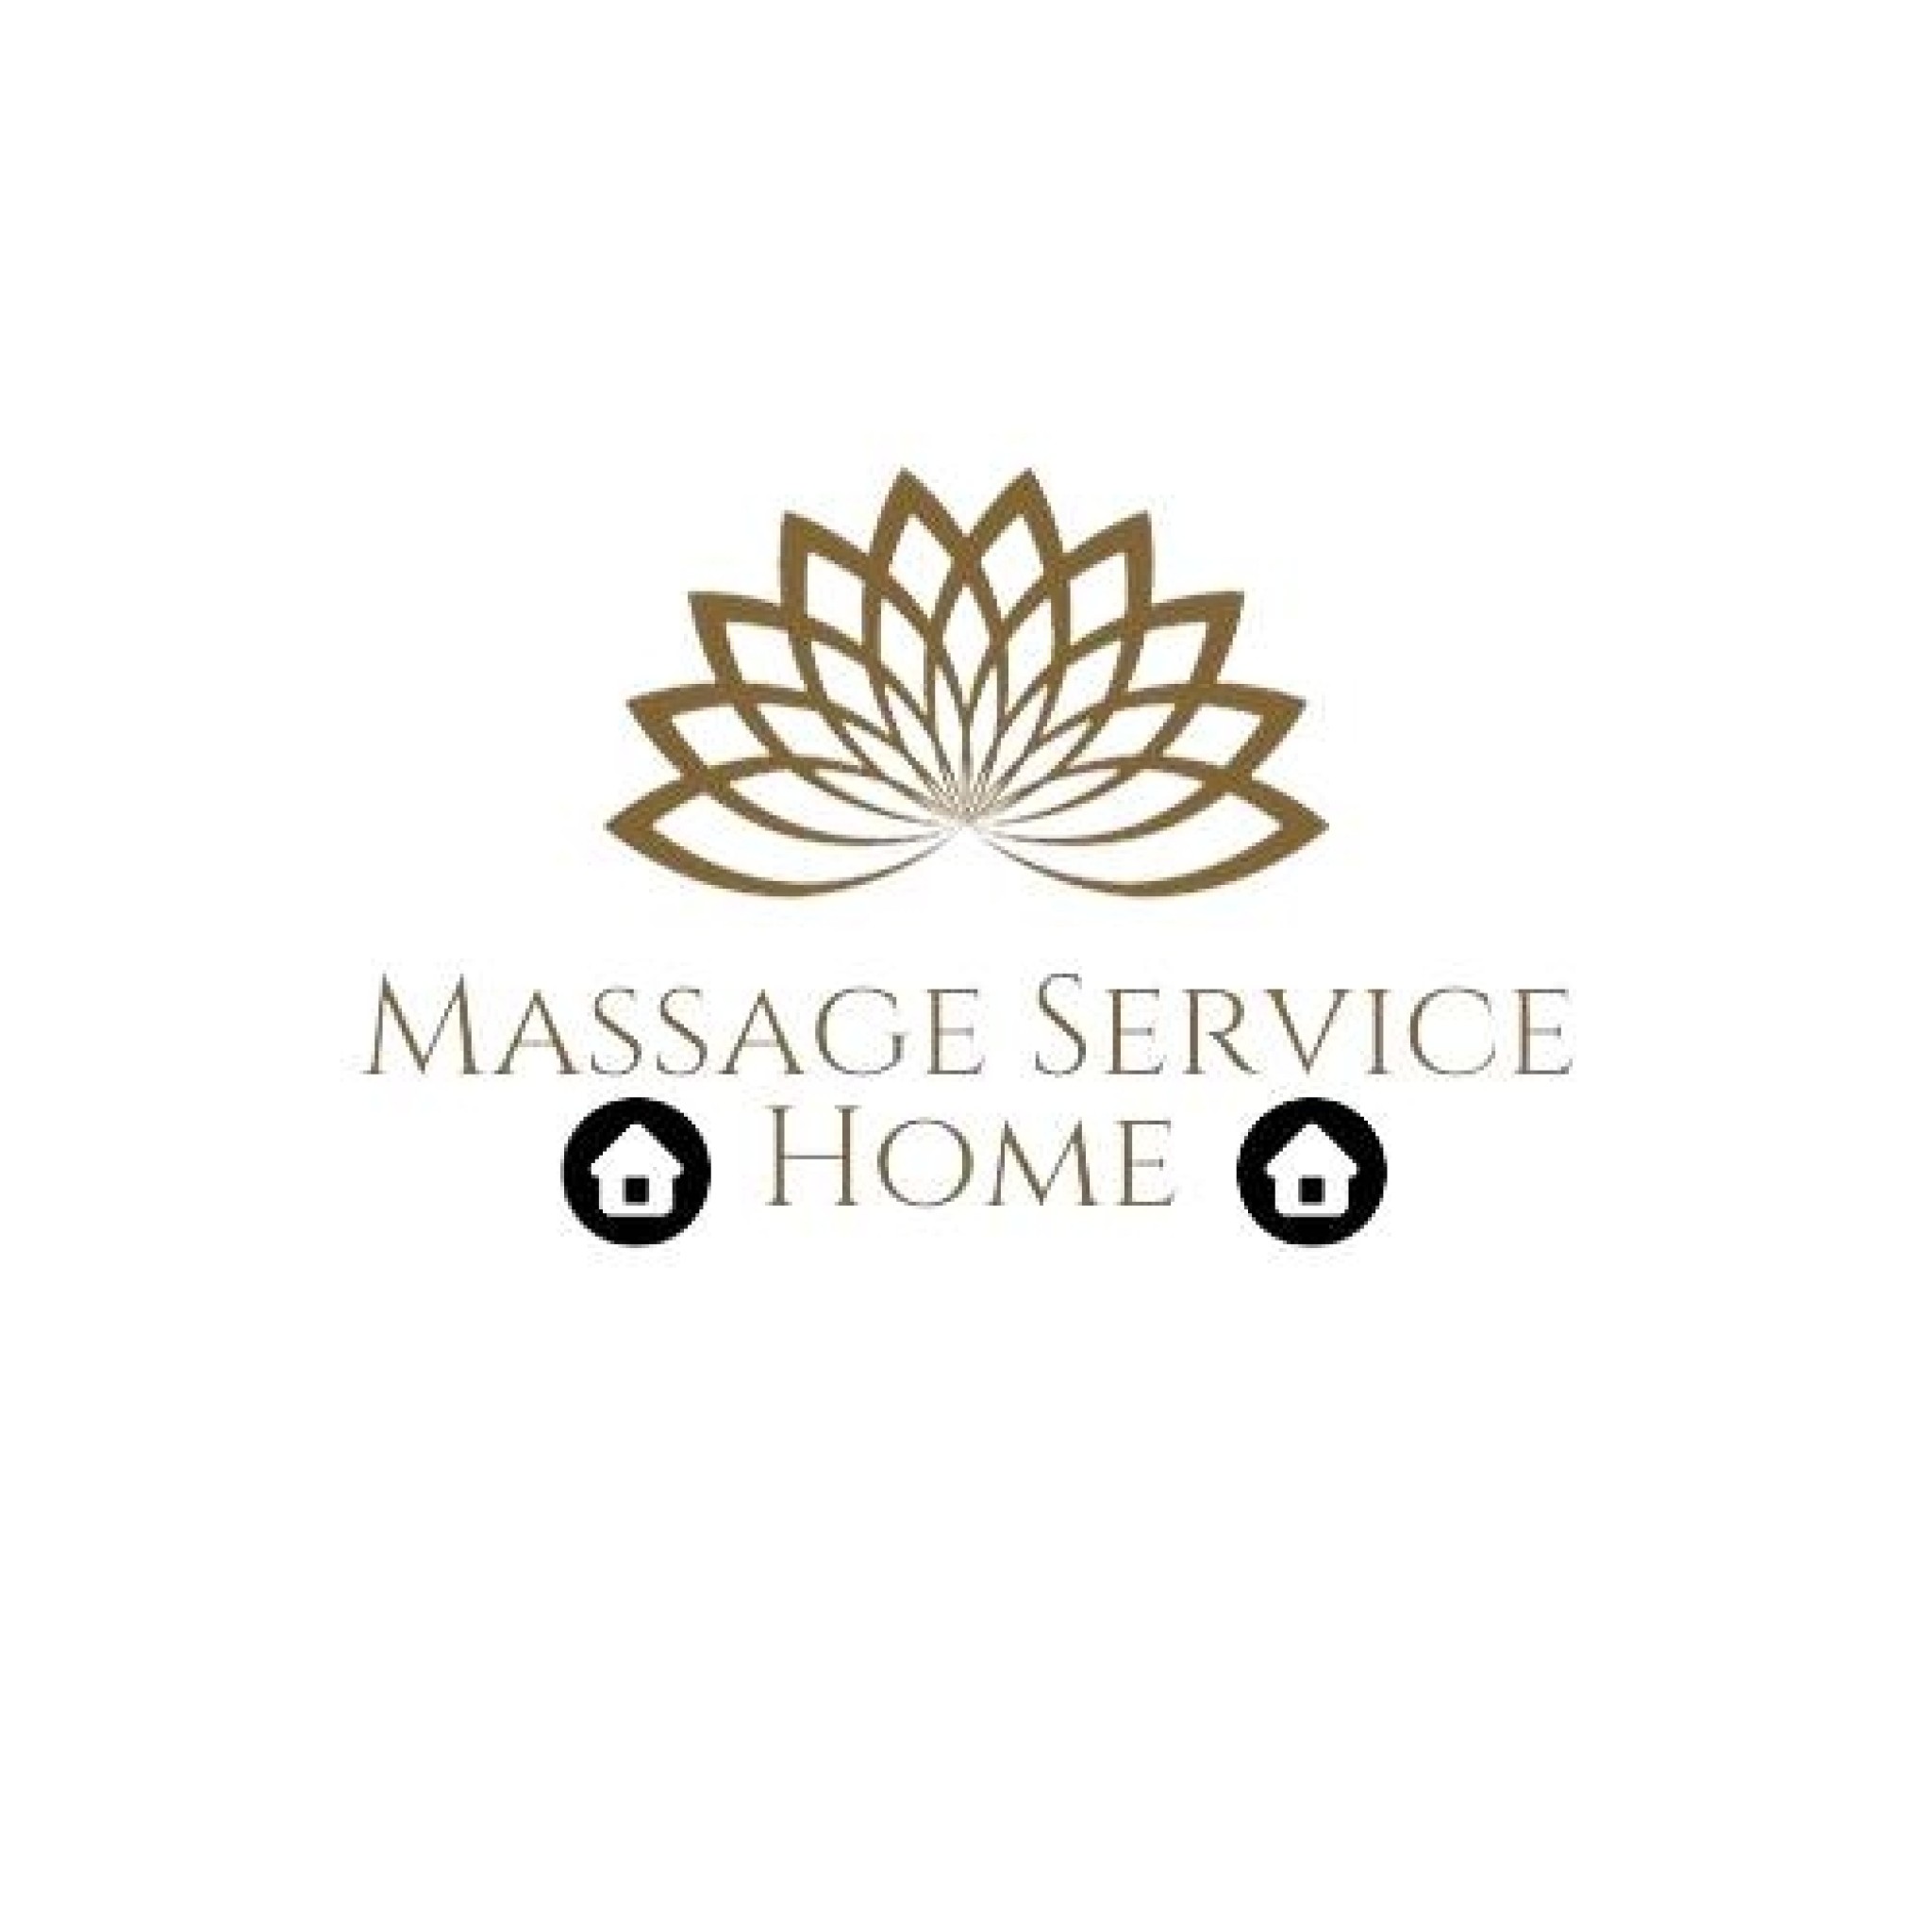 Massage Service Home